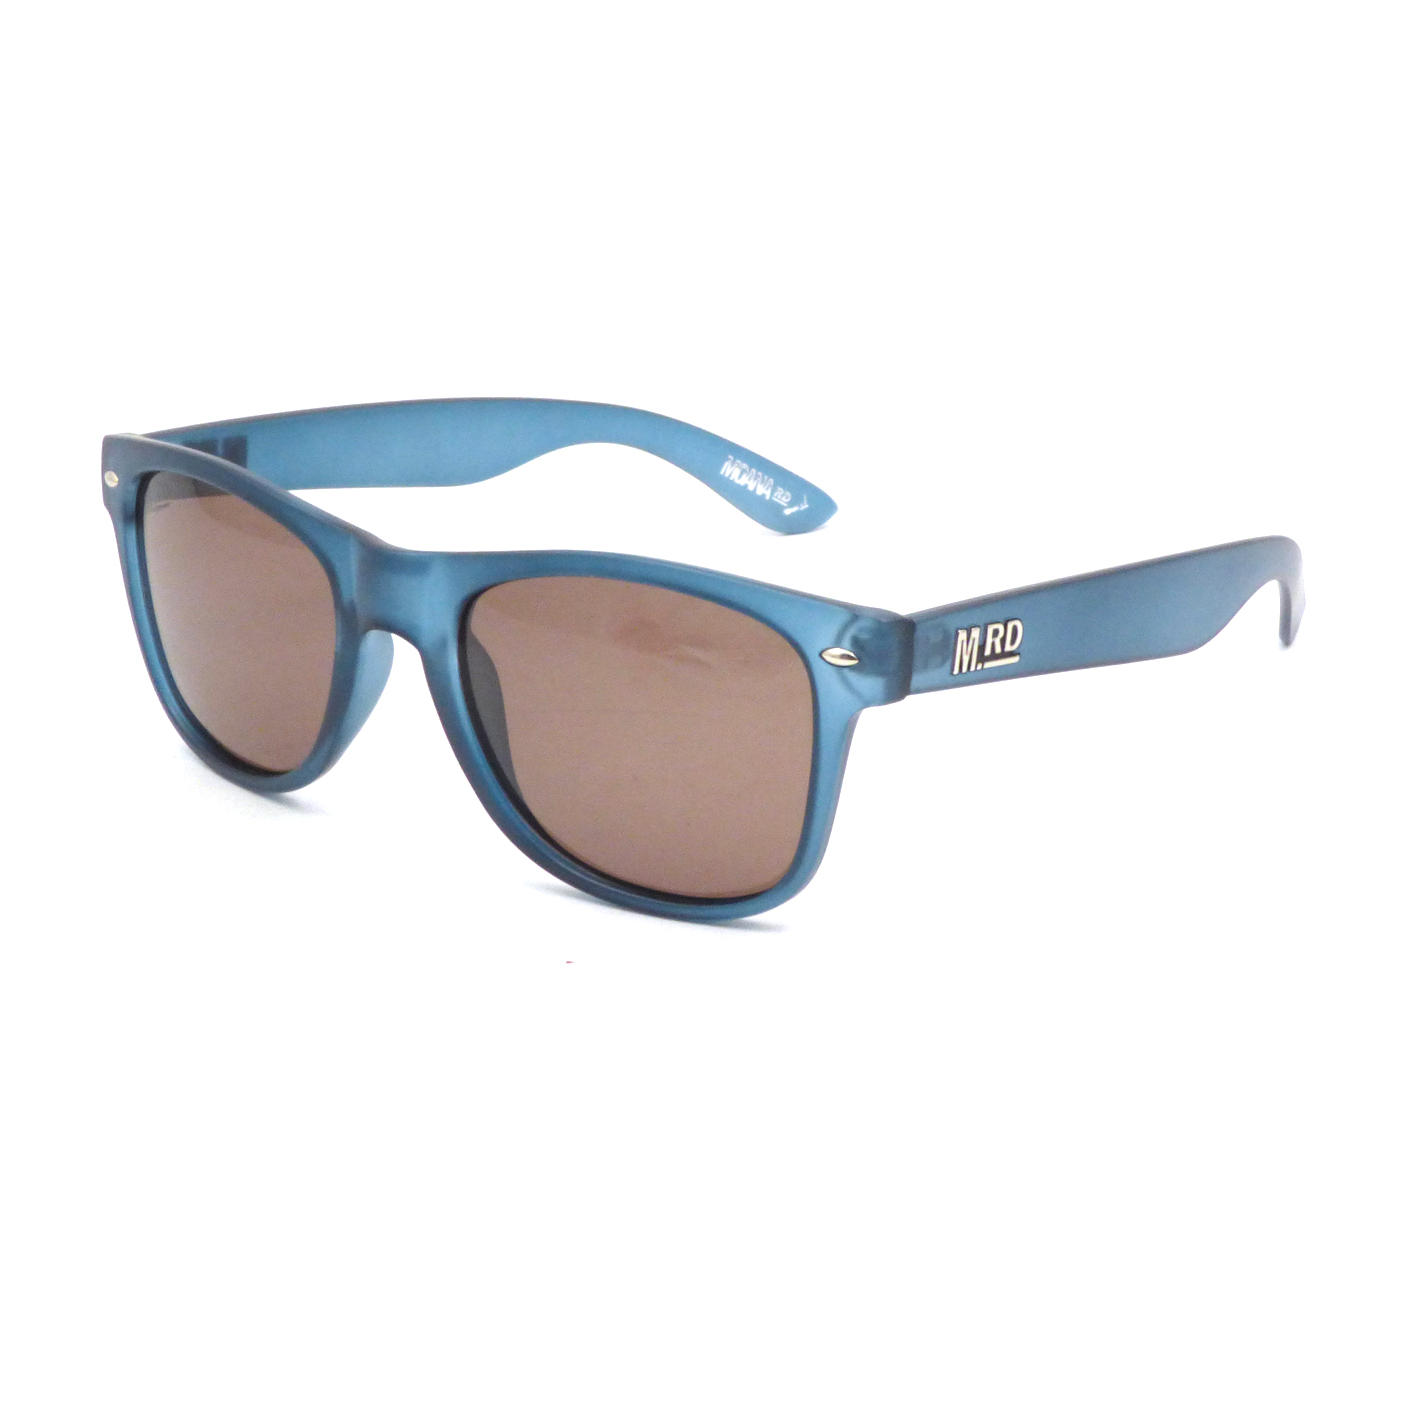 Moana Road Plastics Fantastic Sunglasses - Denim